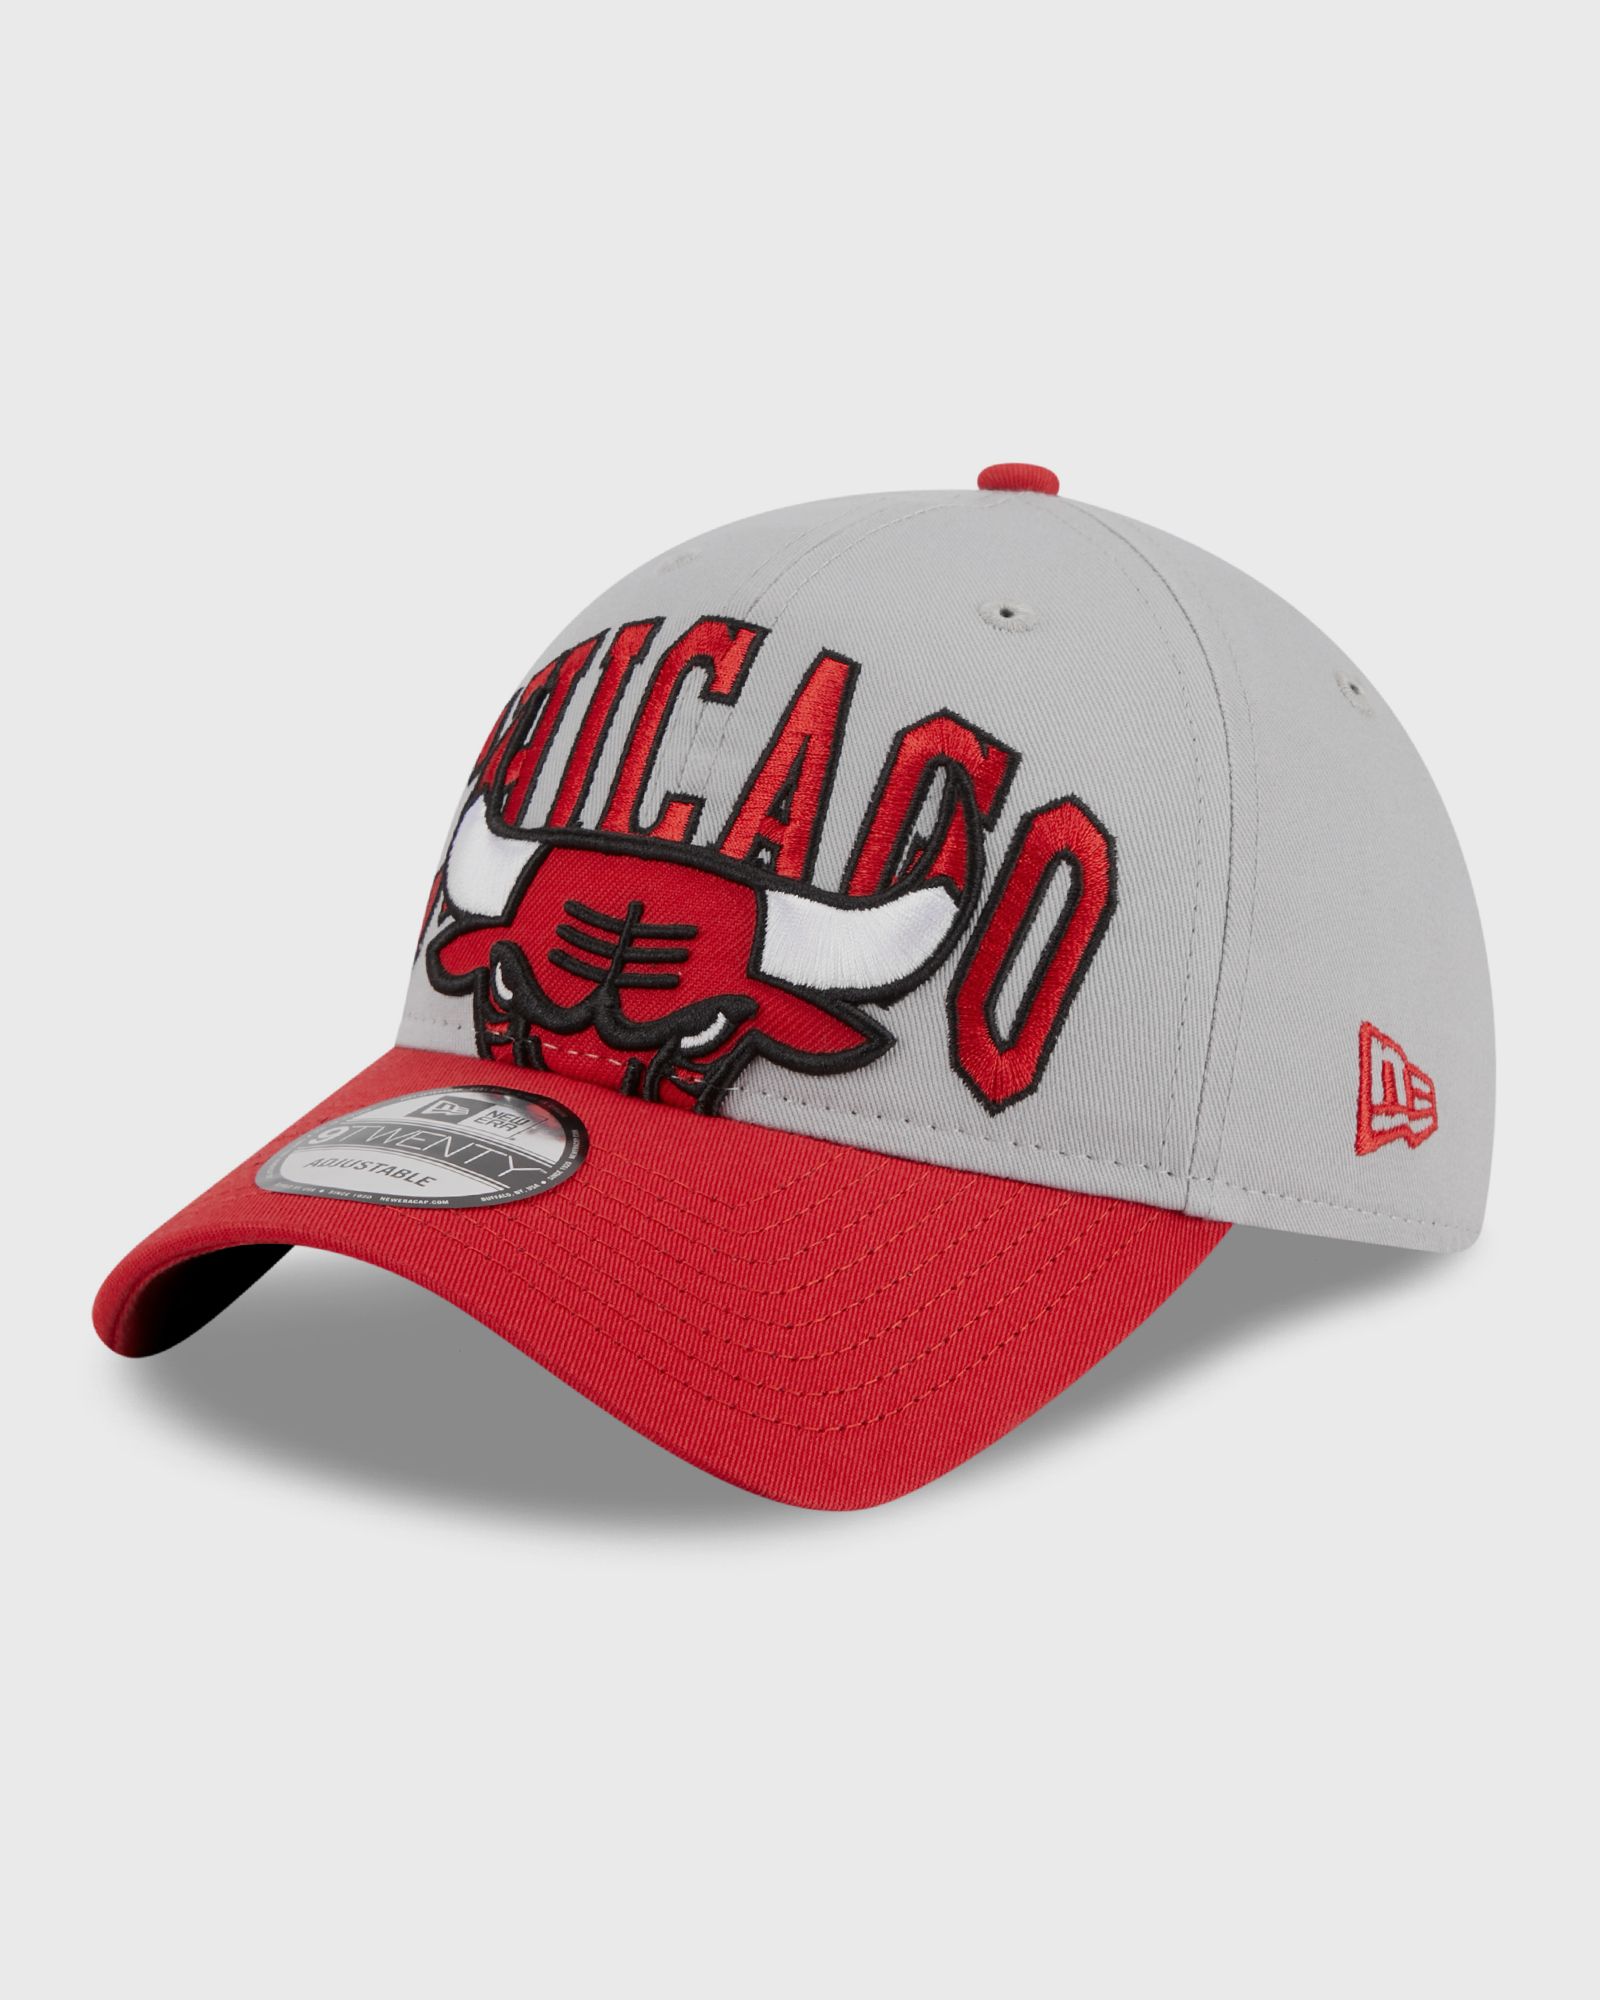 New Era - 920 nba to 23 chicago bulls  dgrotc men caps grey|red in größe:one size